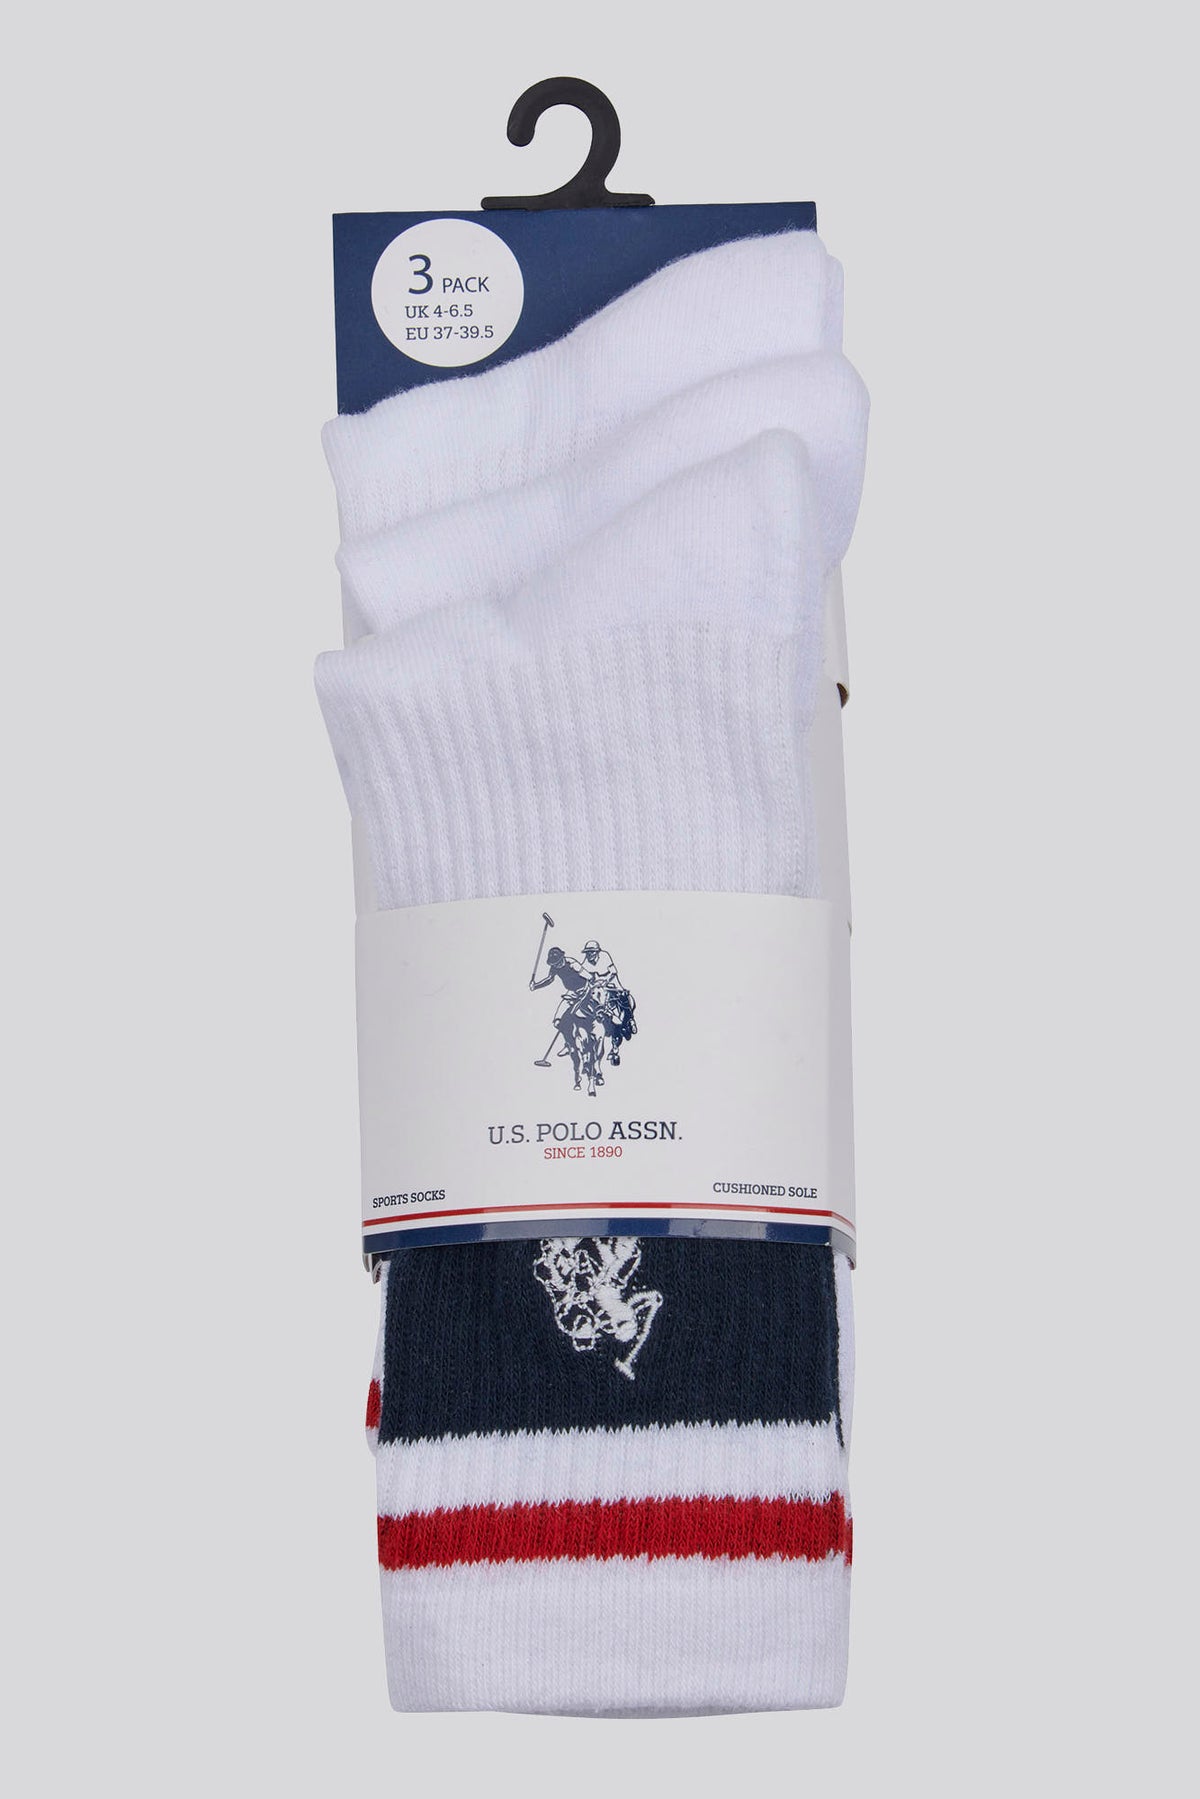 Three Pack Brand Stripe Sports Socks in Bright White